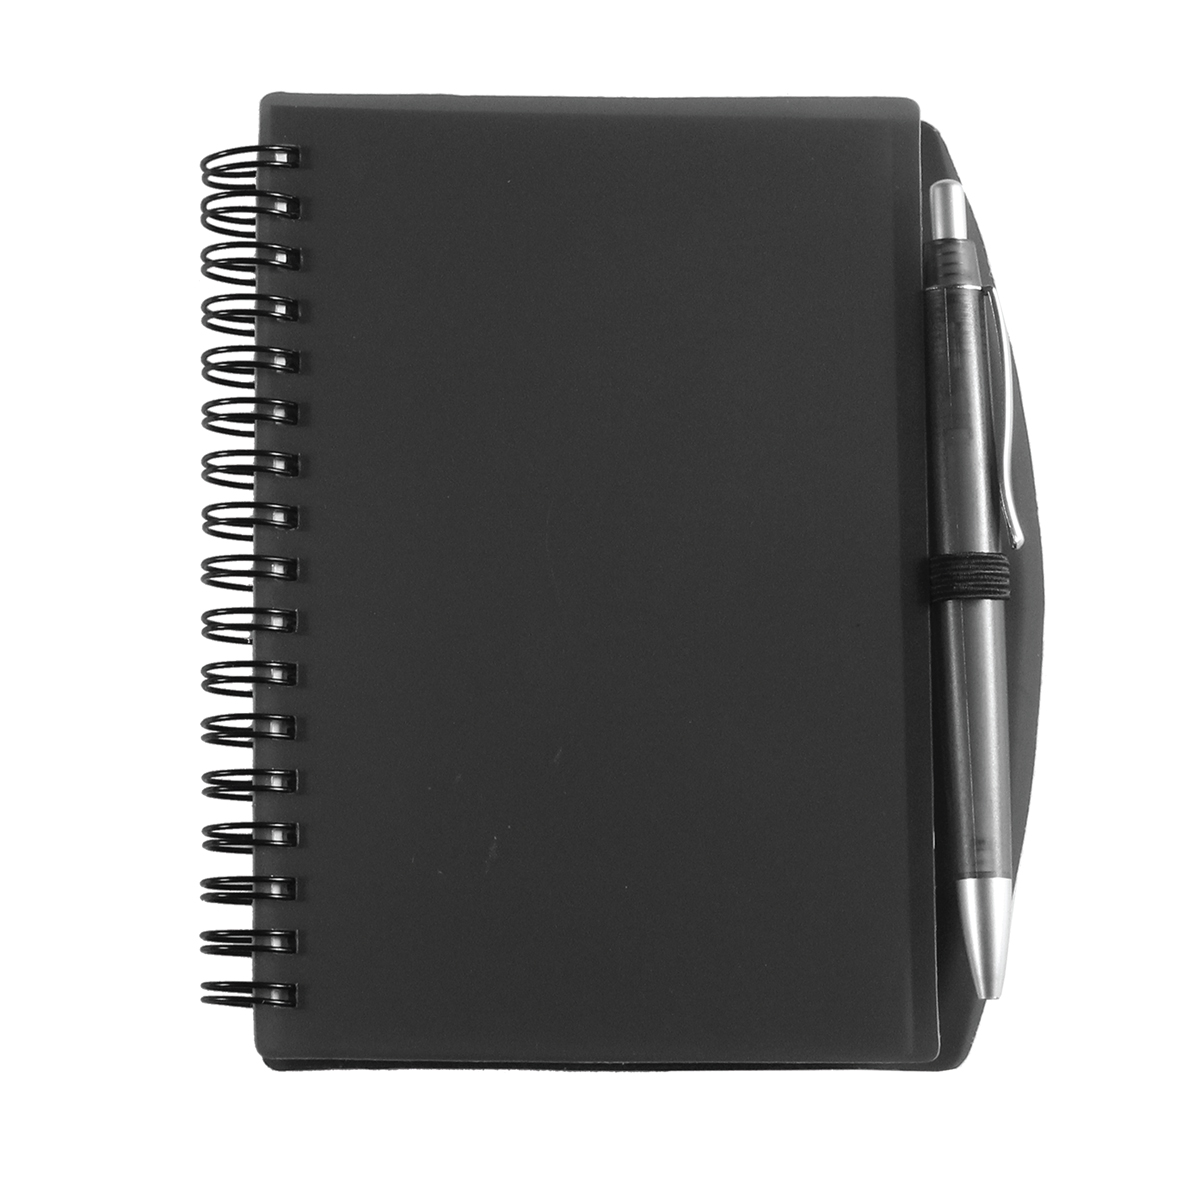 Black Carmel Jotter Notepad Notebook with Pen